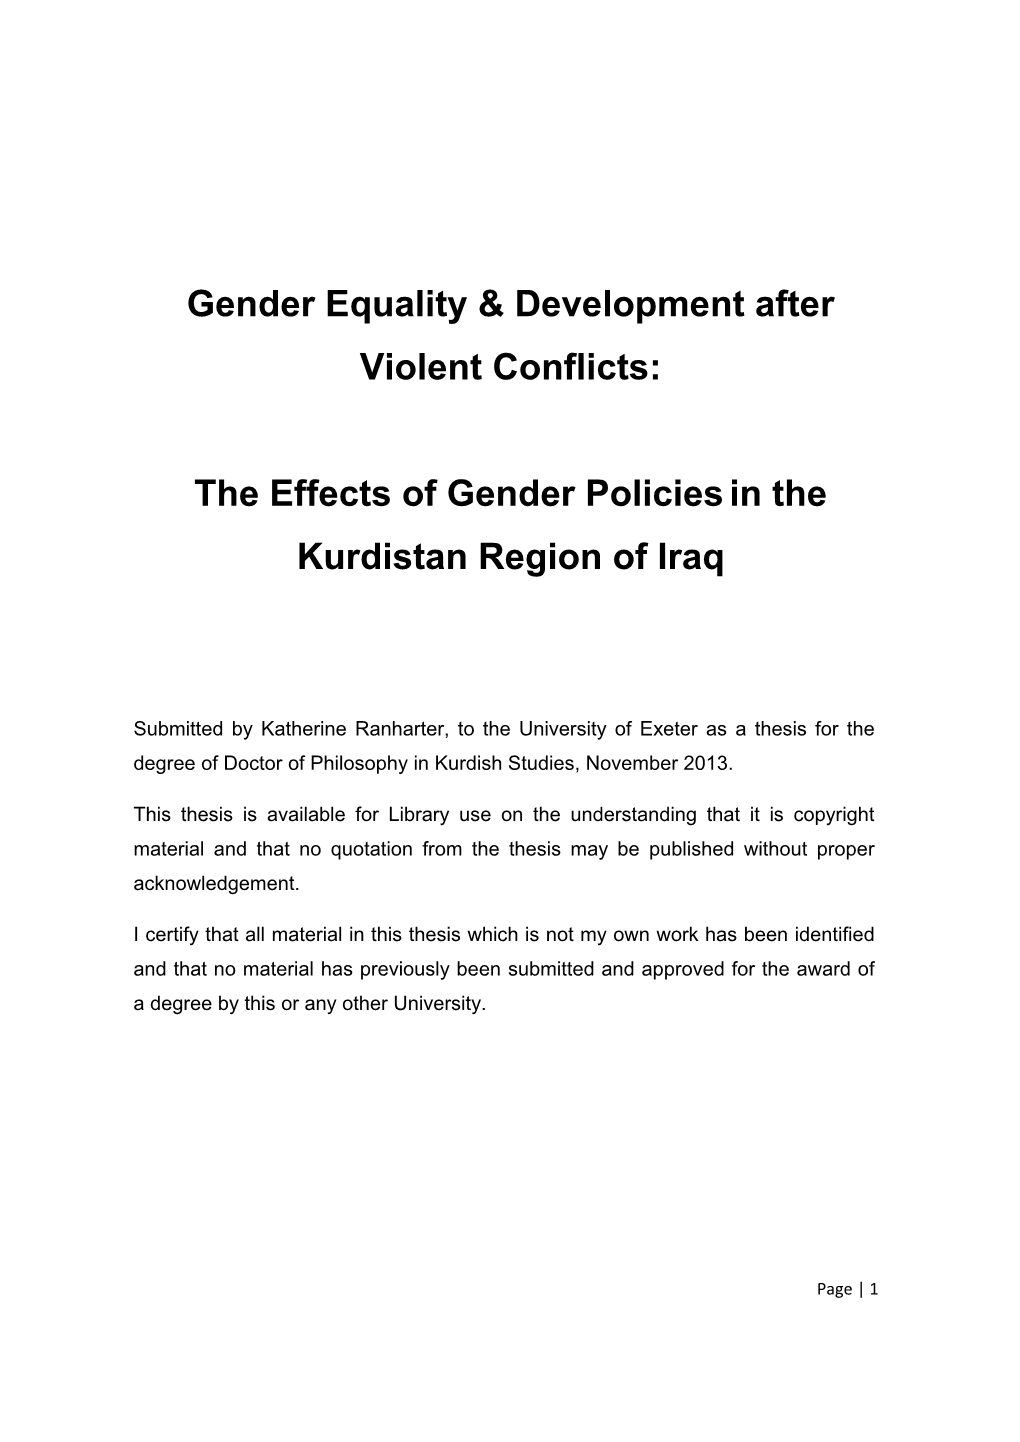 The Effects of Gender Policiesin the Kurdistan Region of Iraq